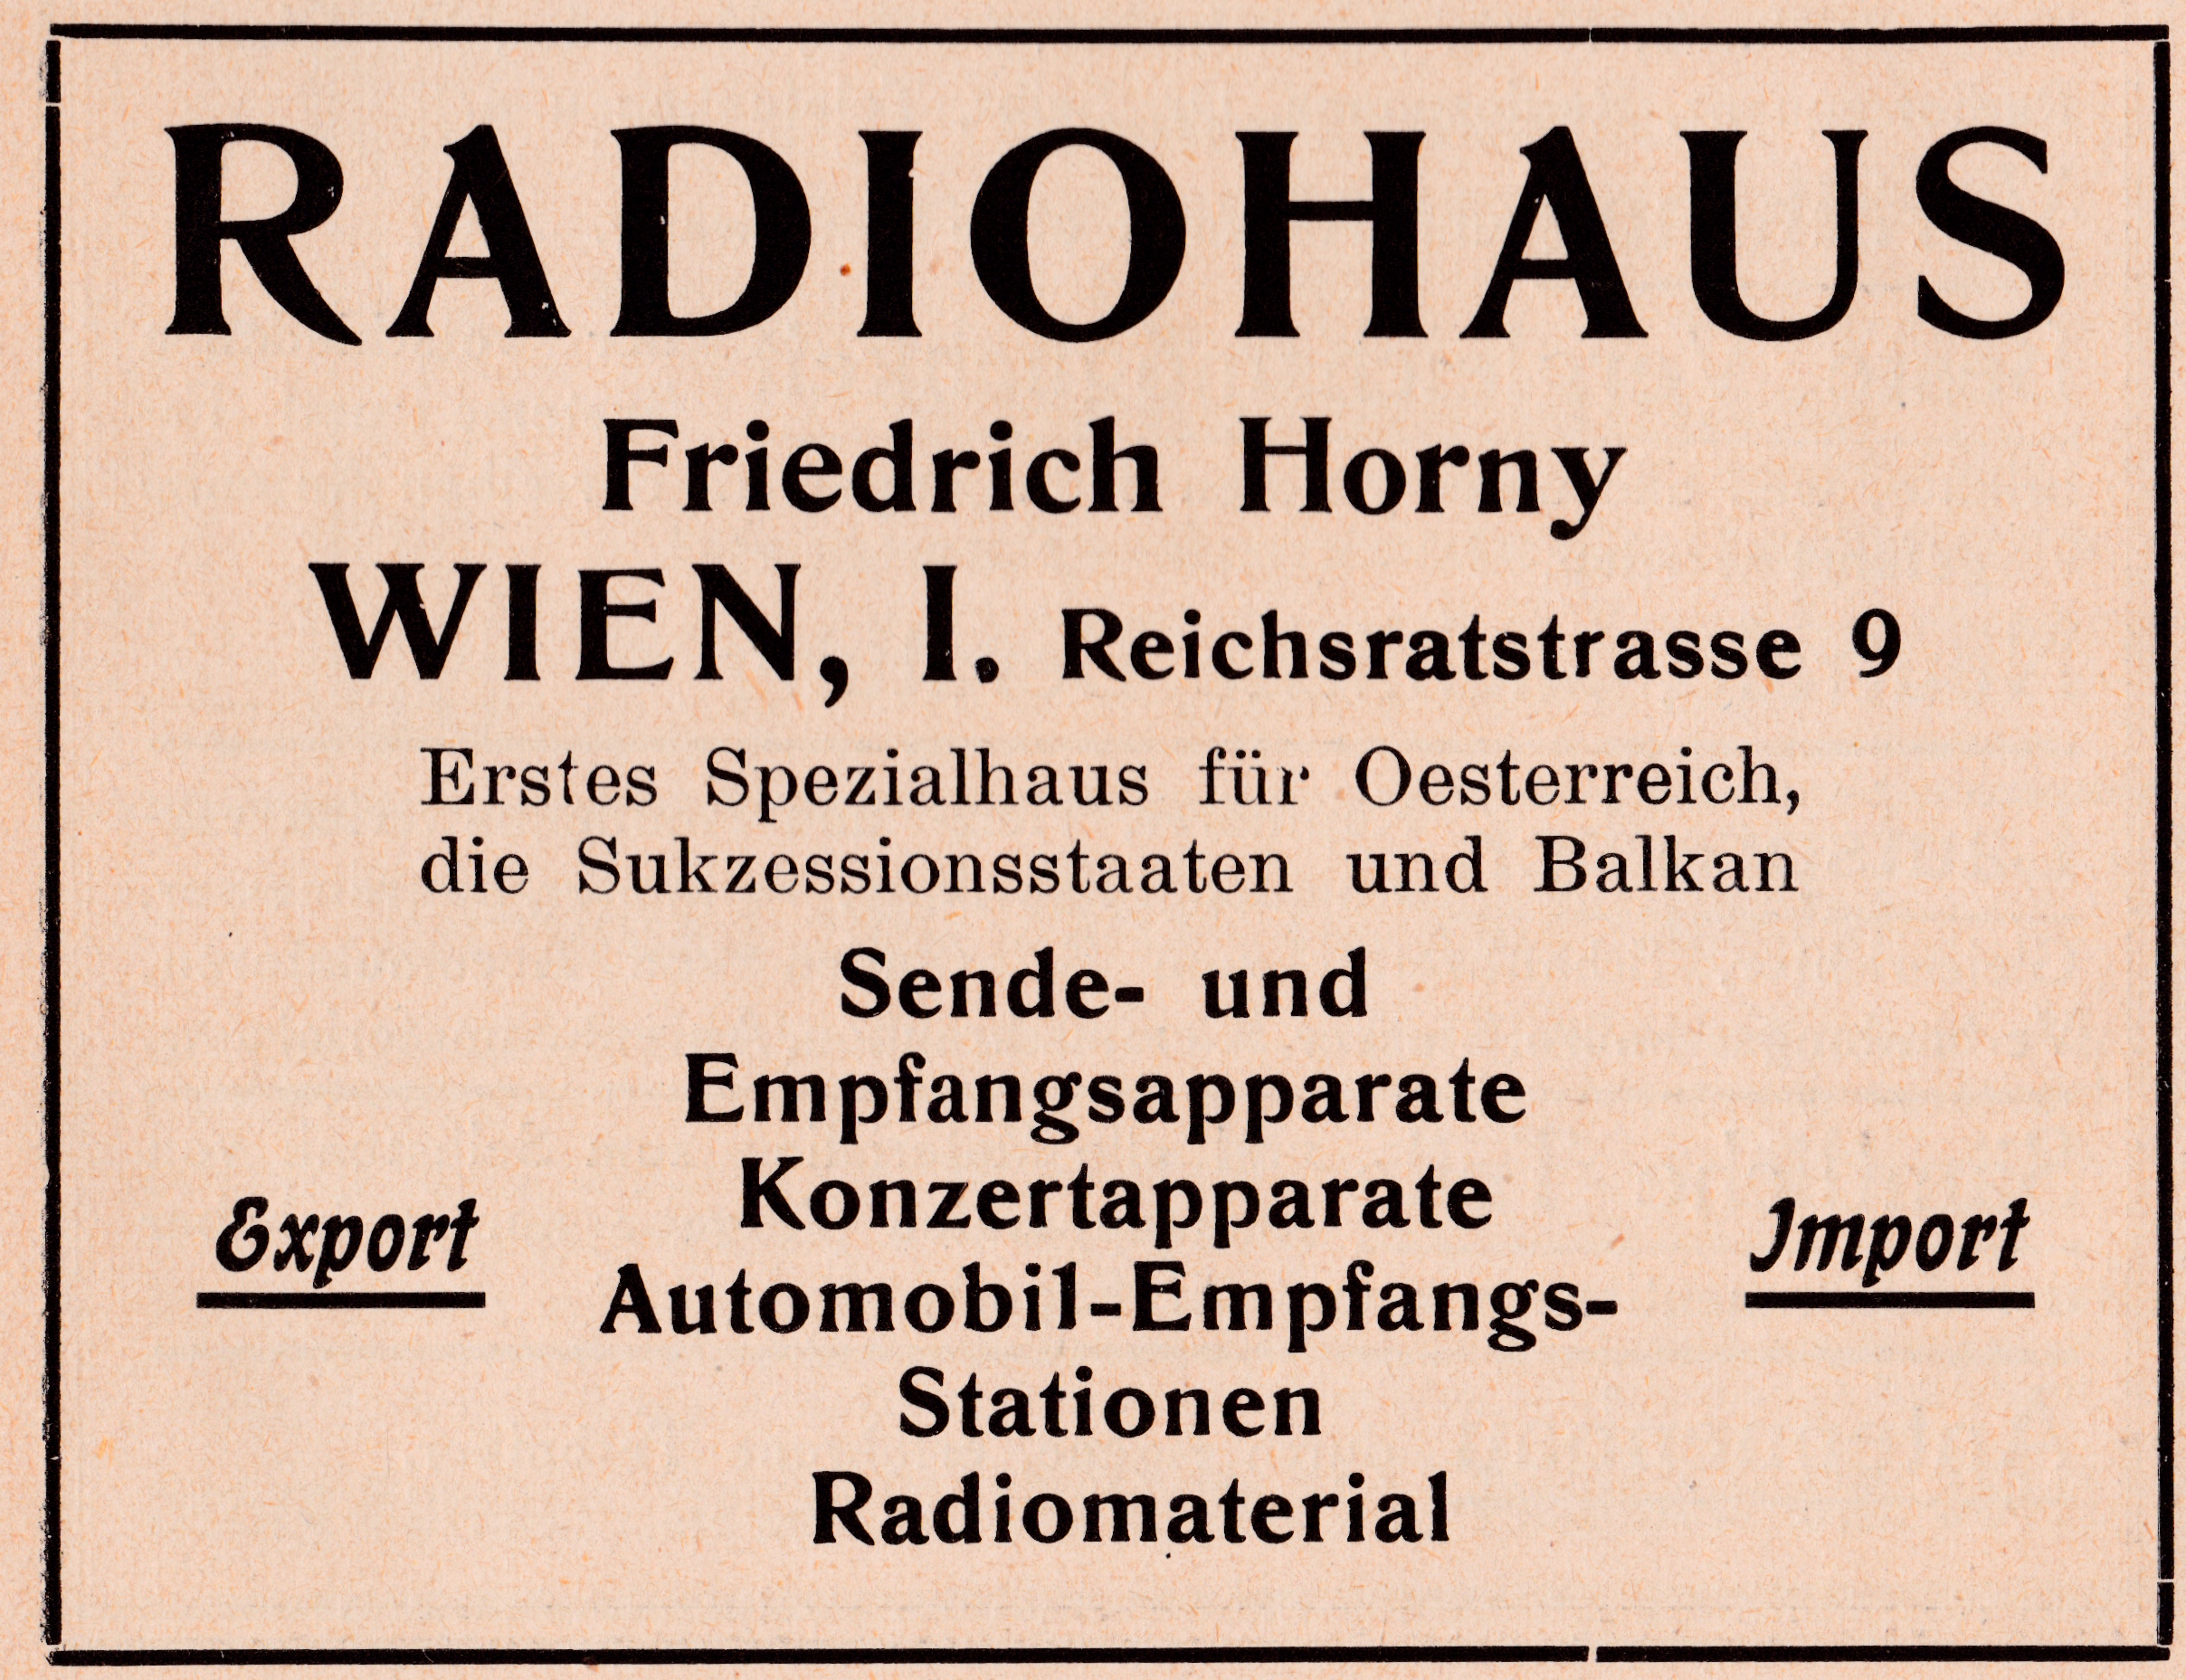 Radiohaus Horny